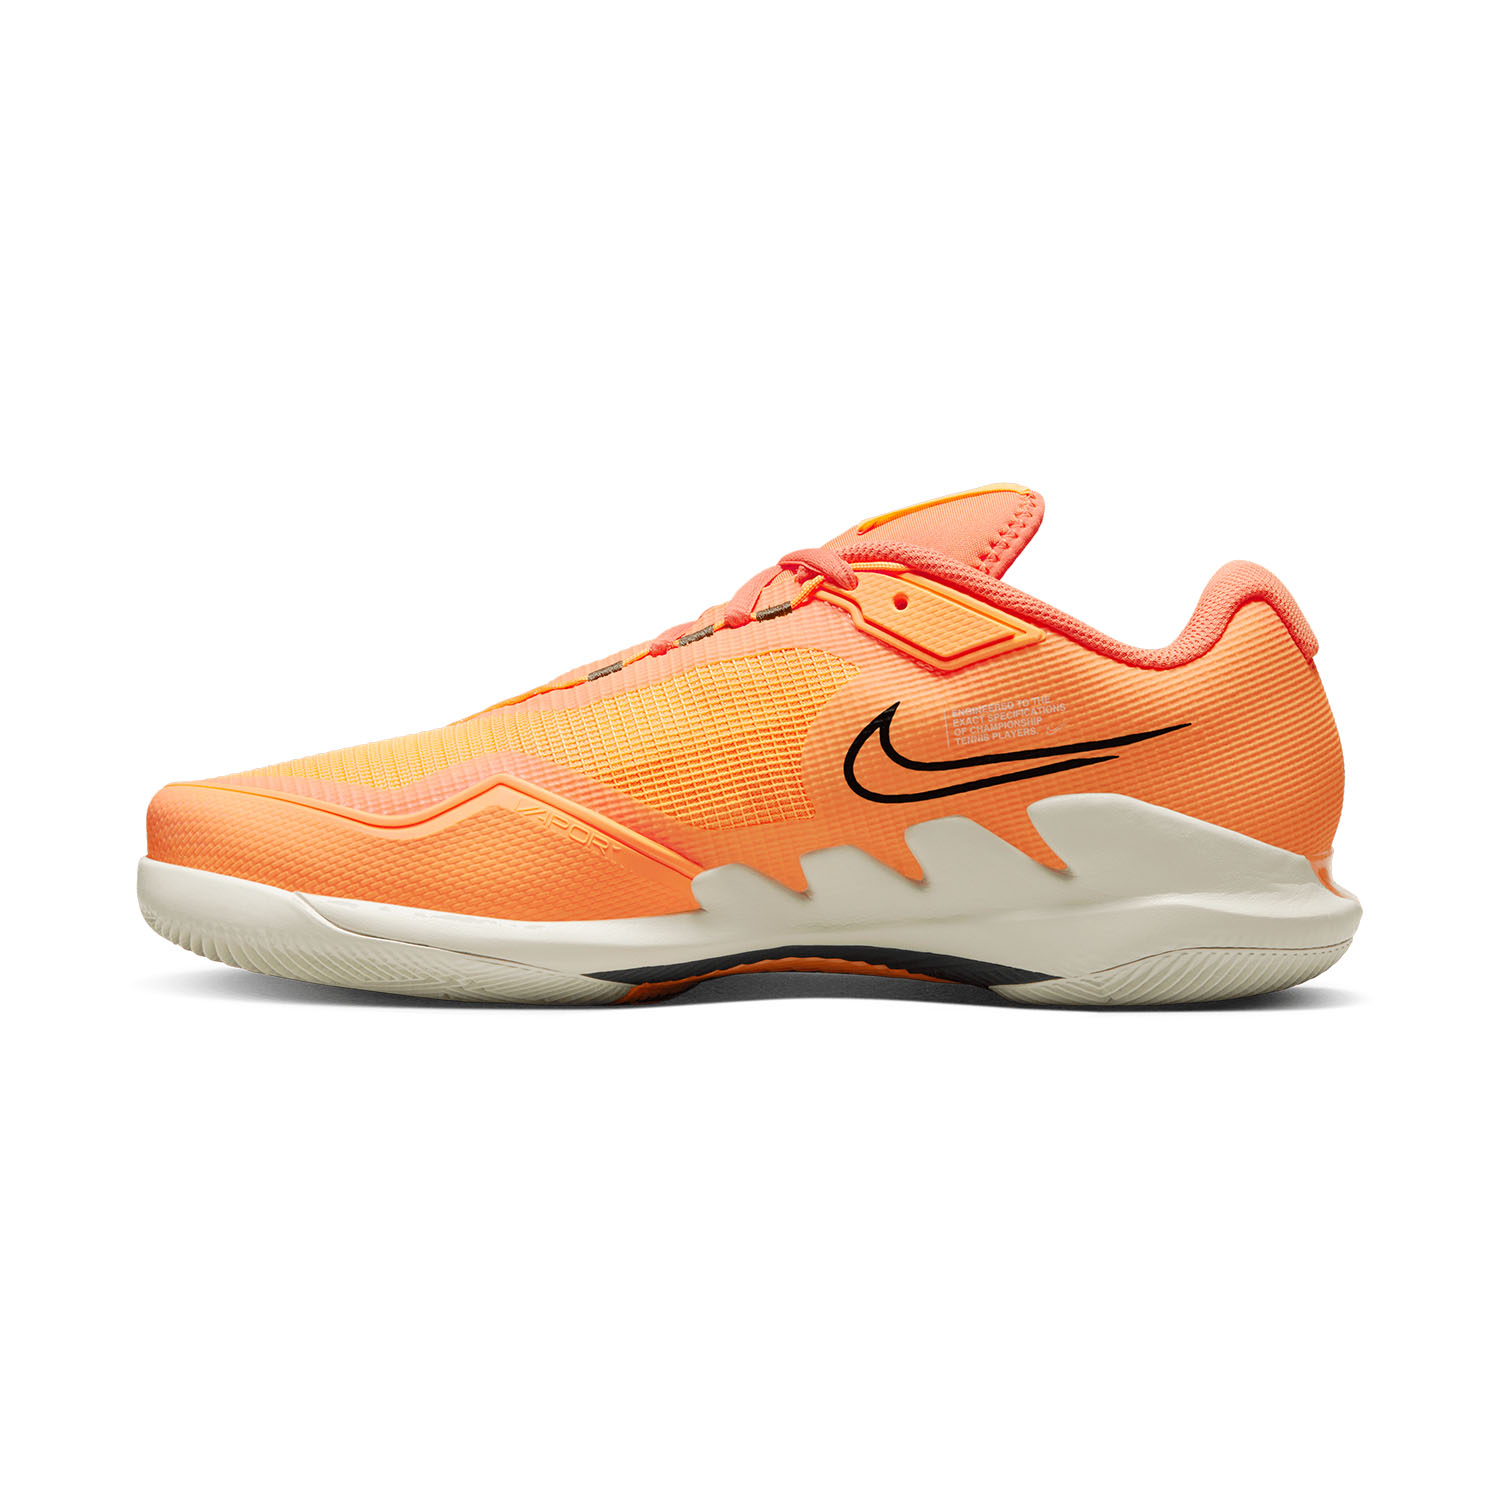 Nike Air Zoom Vapor Pro Men's Shoes - Peach Cream